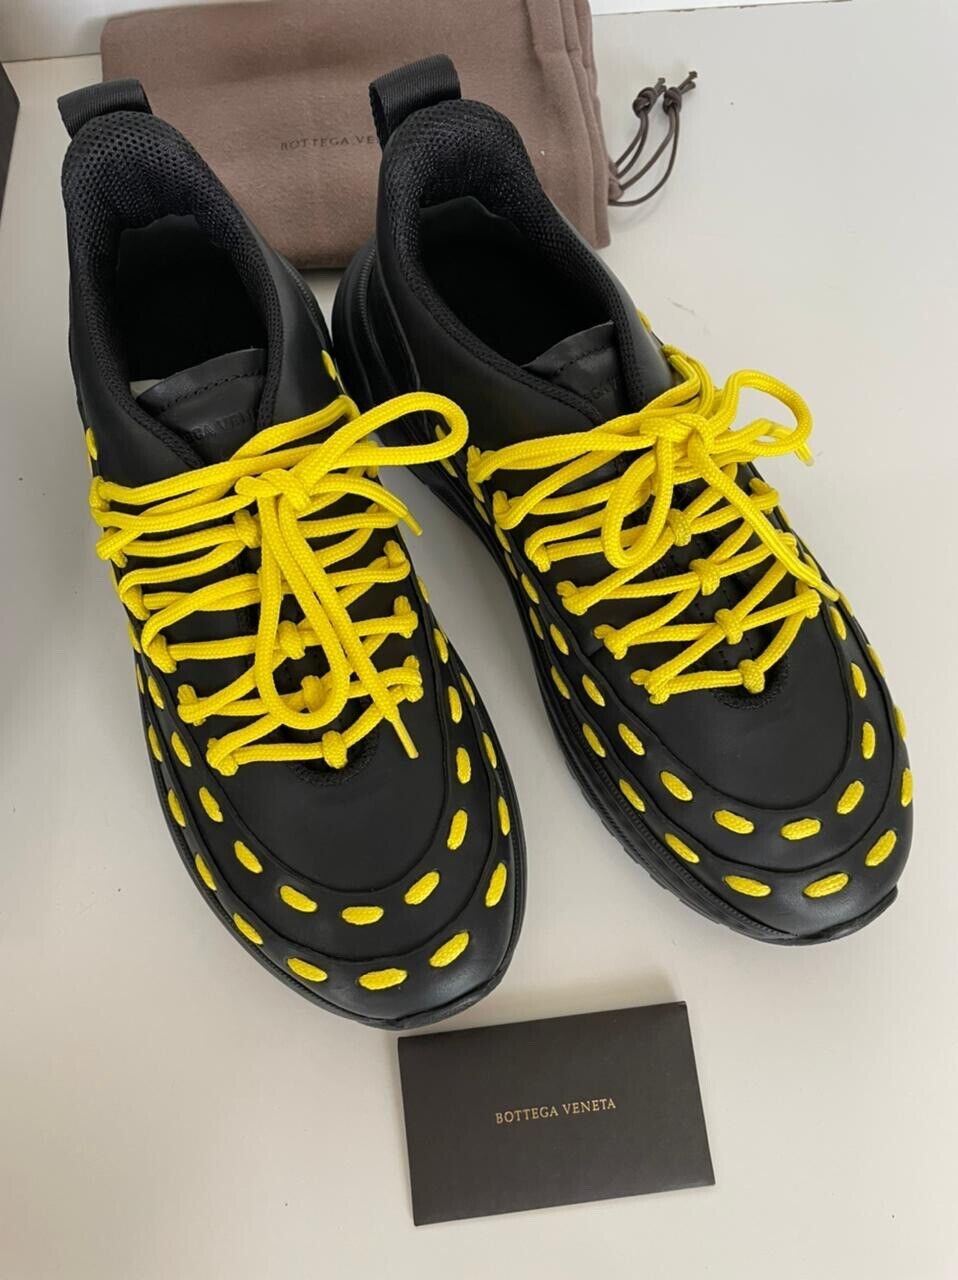 NIB $950 Bottega Veneta Mens Leather Black/Yellow Sneakers 10 US (43 Eu) 578305